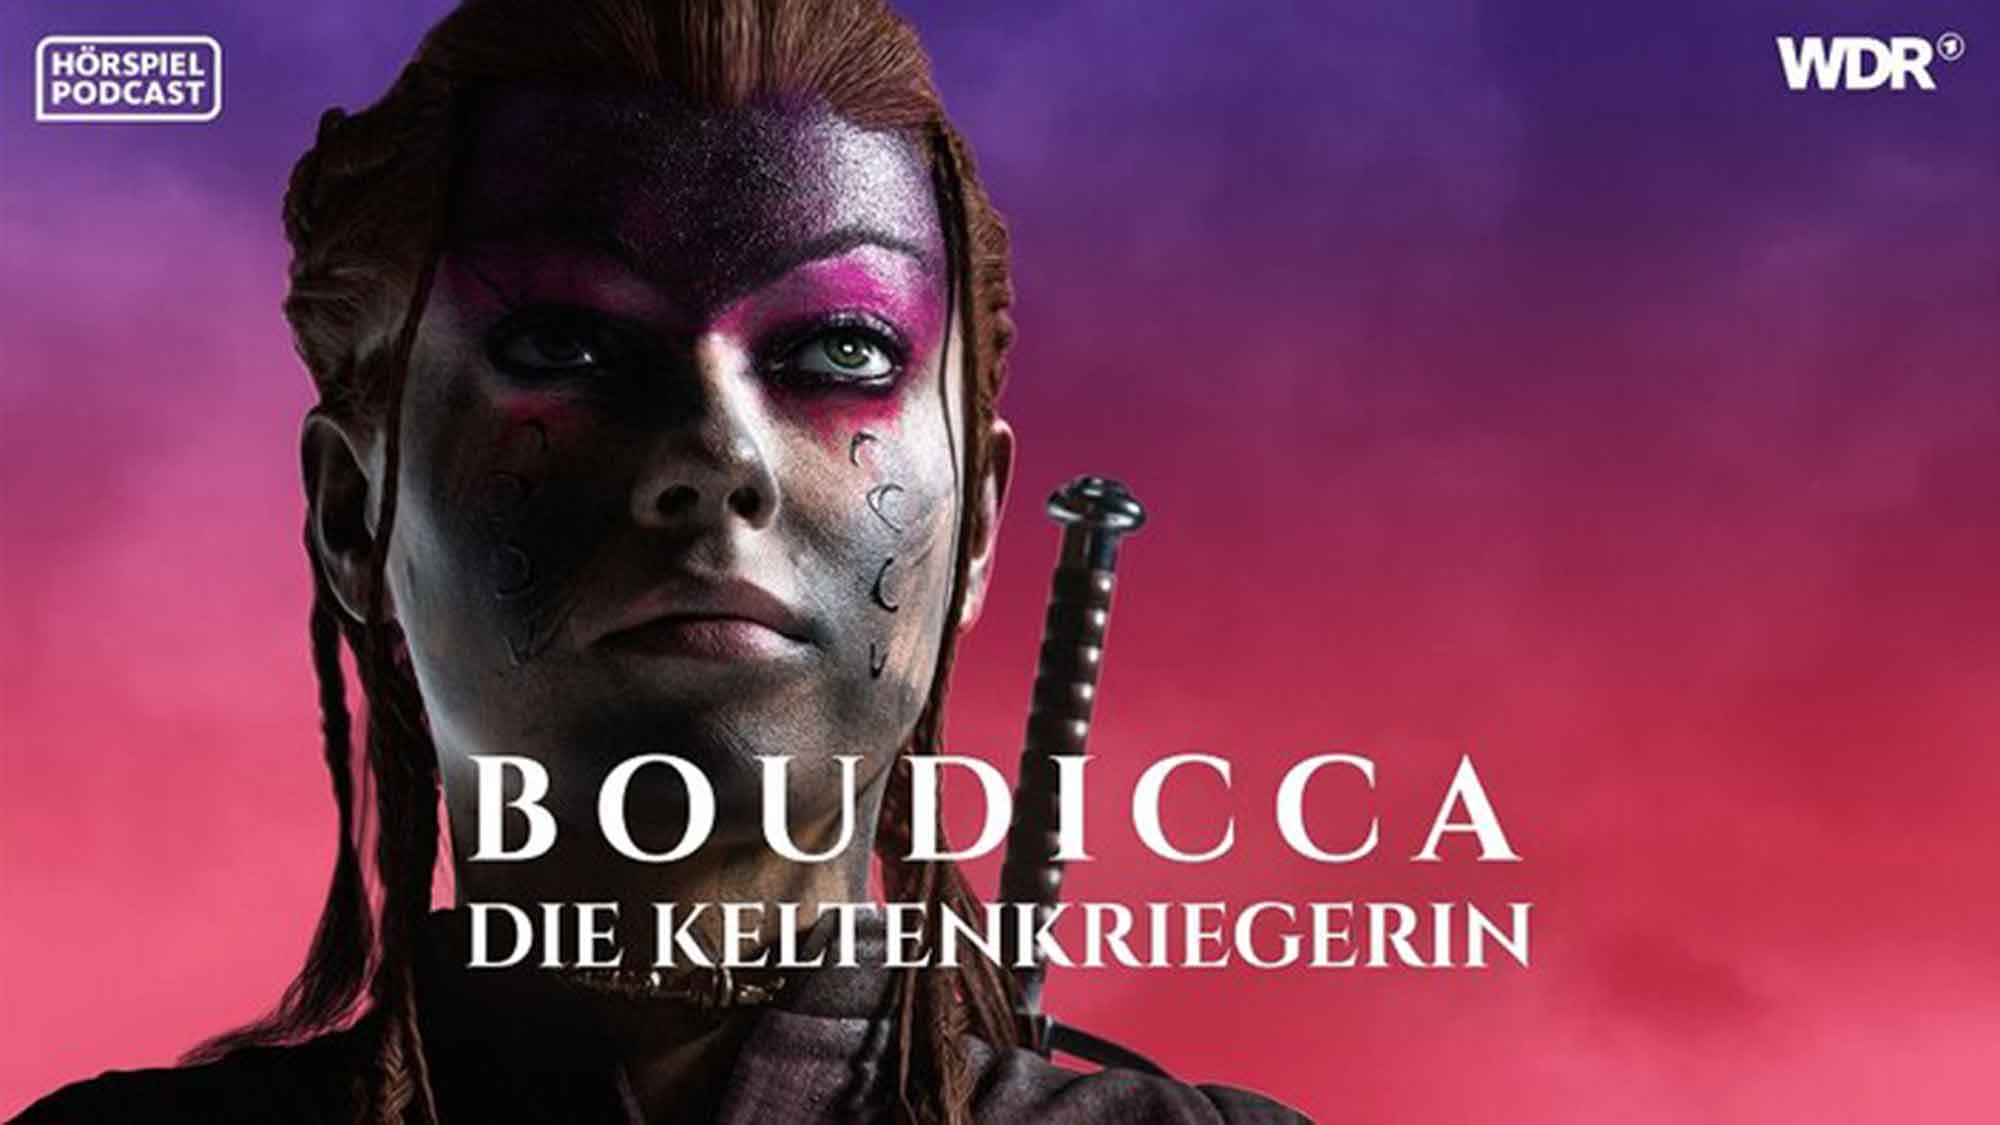 WDR Podcast: Boudicca. Die Keltenkriegerin